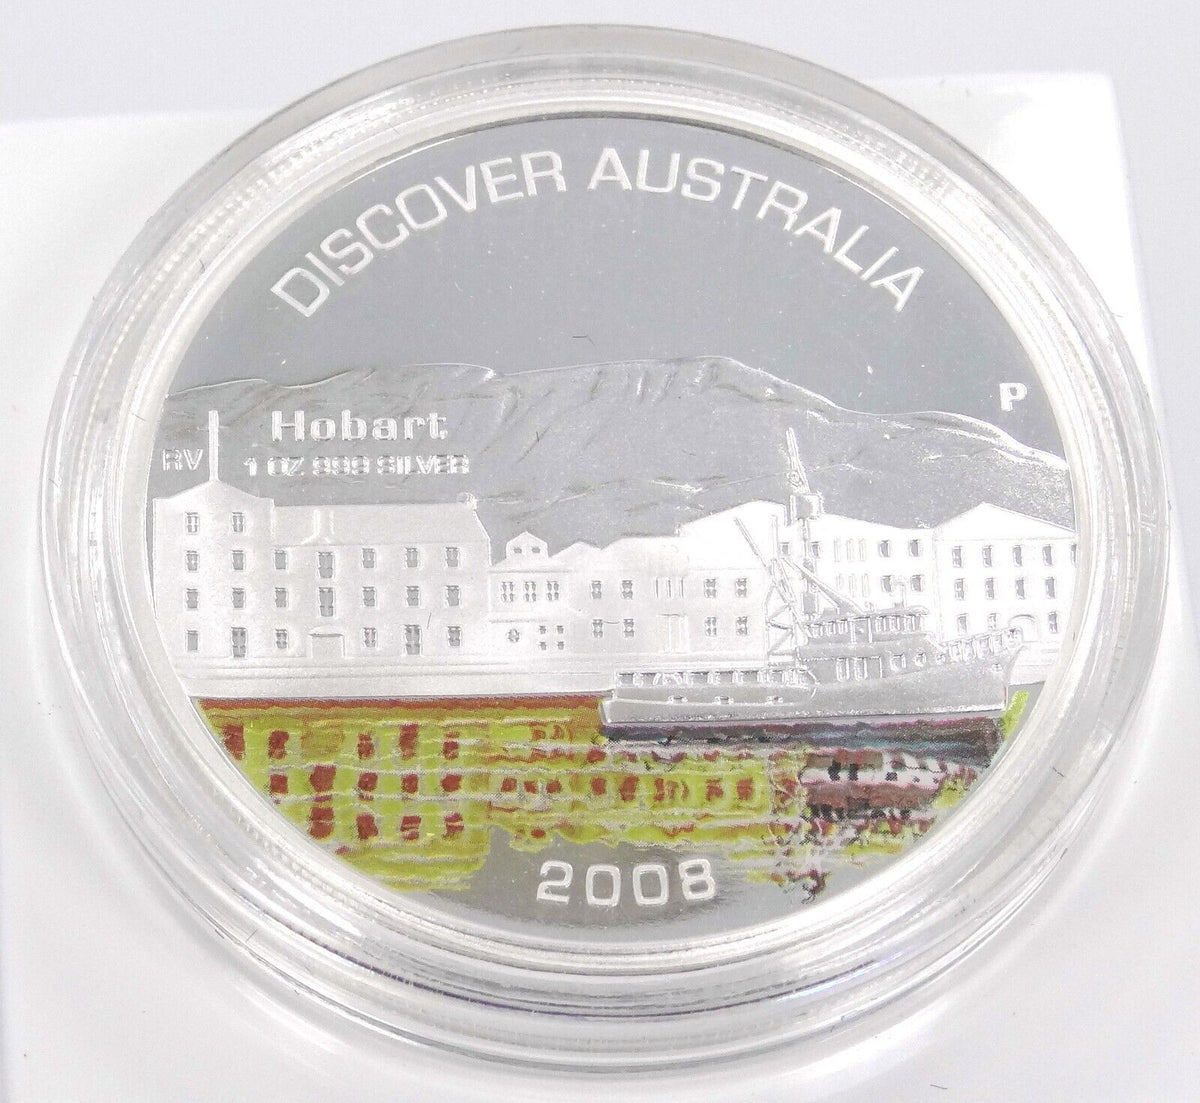 1 Oz Silver Coin 2008 $1 Australia Discover Australia Proof Coin - Hobart-classypw.com-1